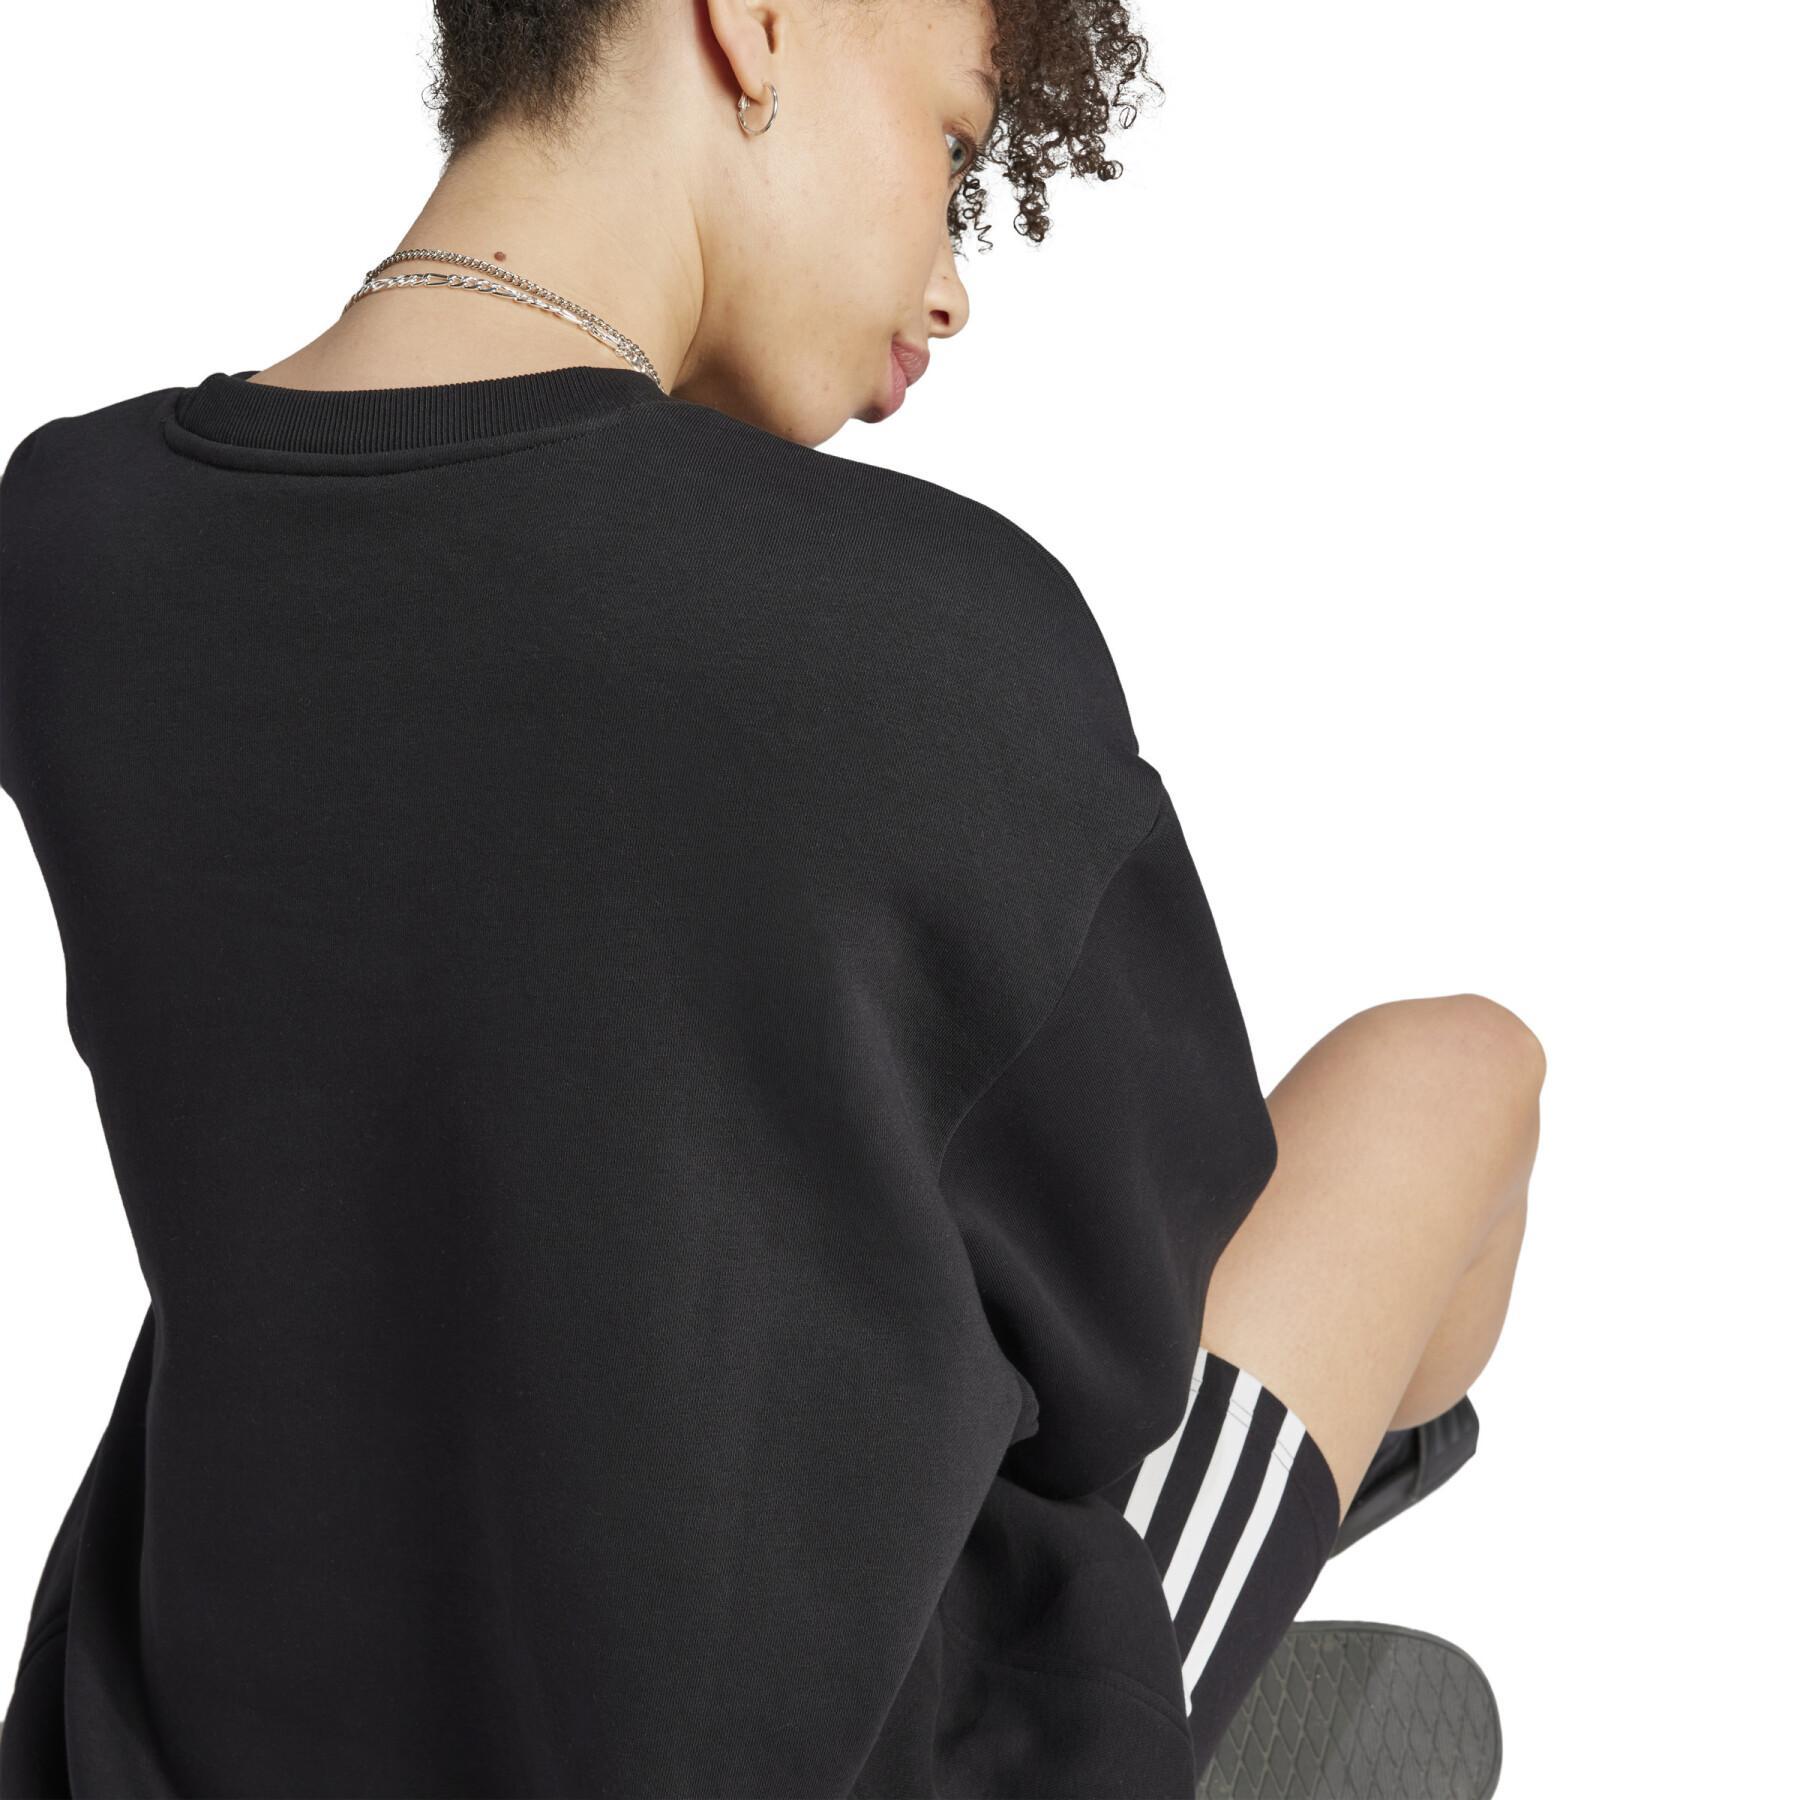 Women's graphic fleece sweatshirt adidas All SZN